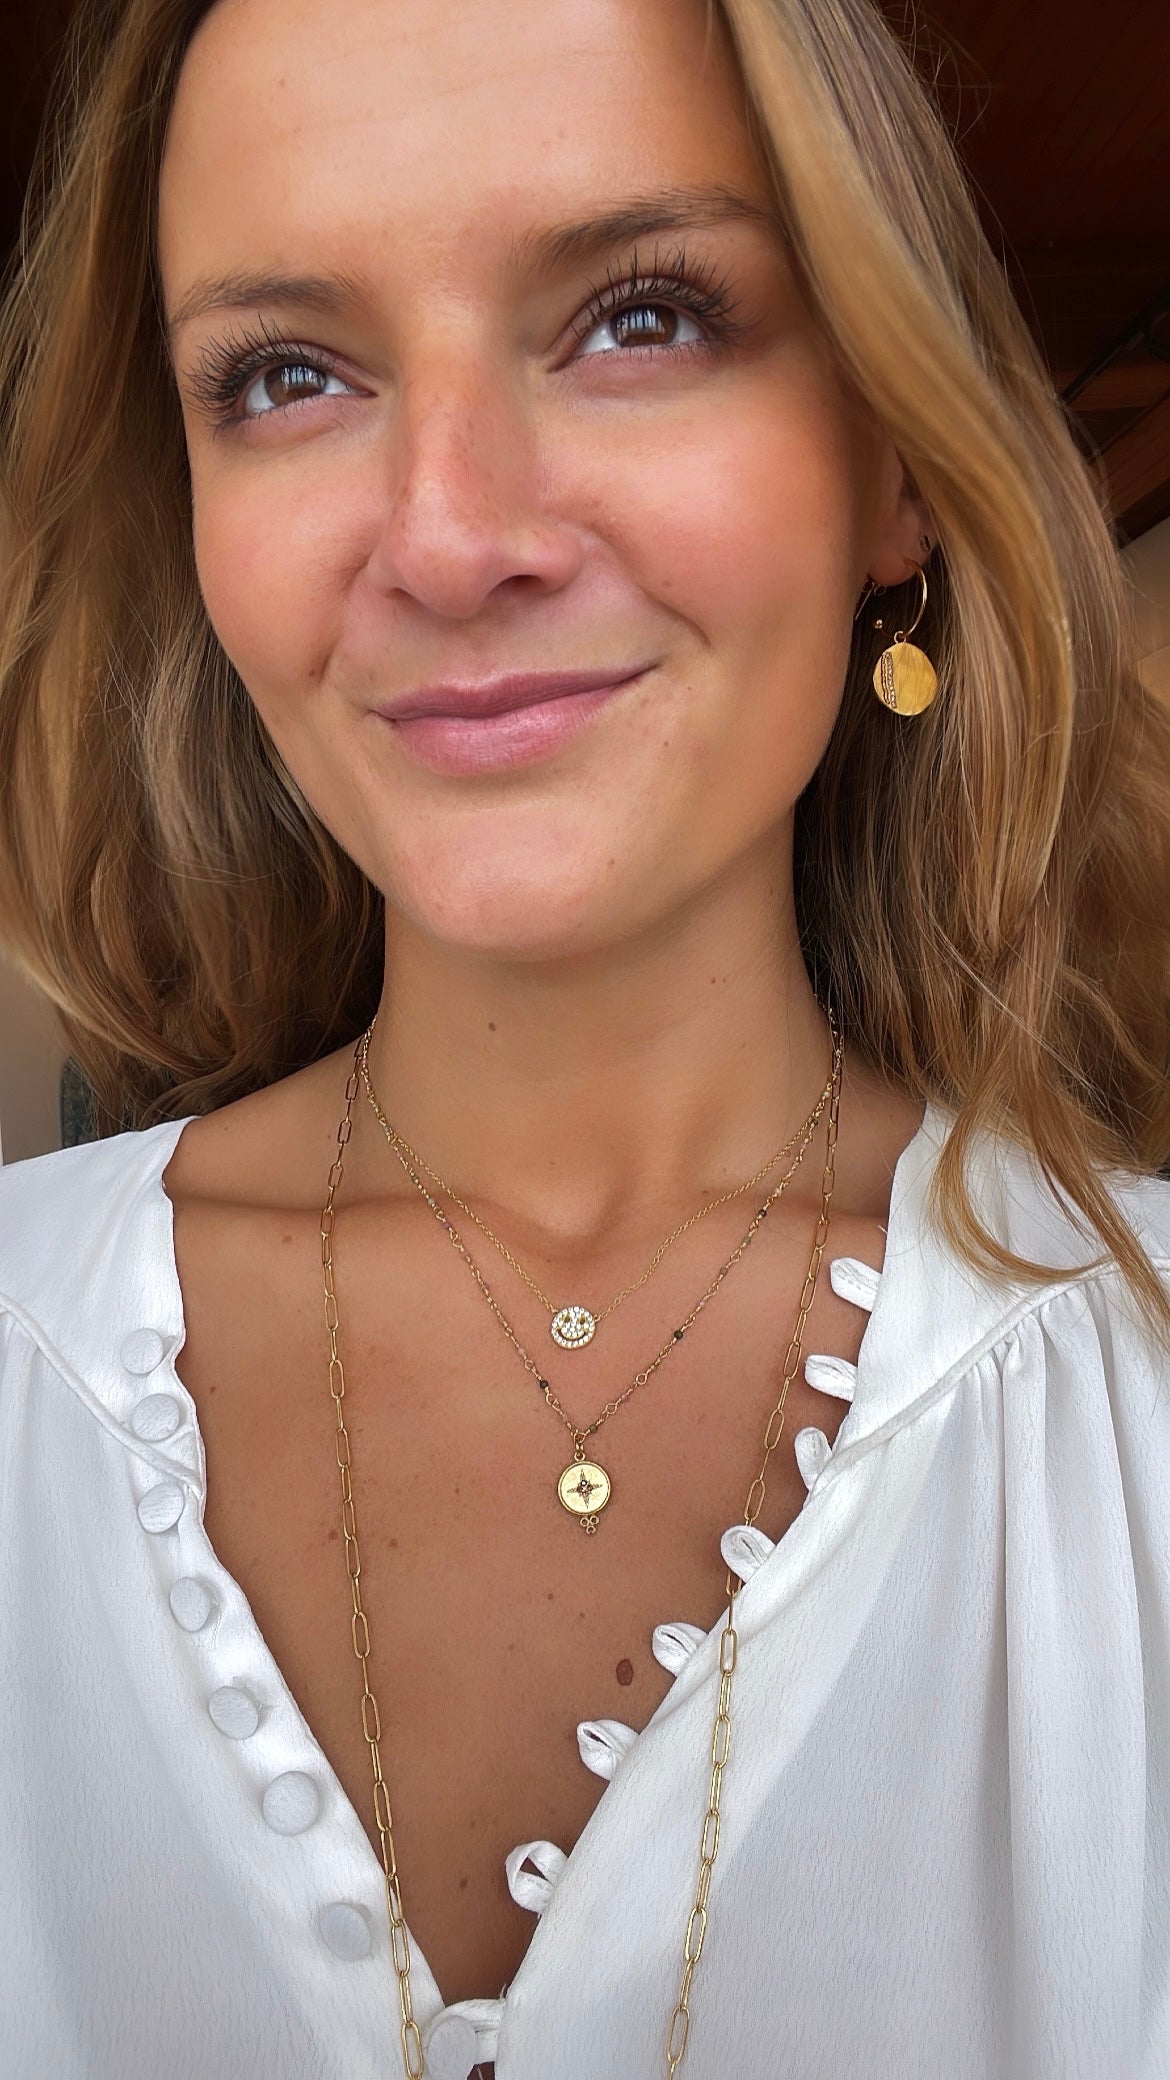 smiley pendant necklace gemstone necklace layering necklaces